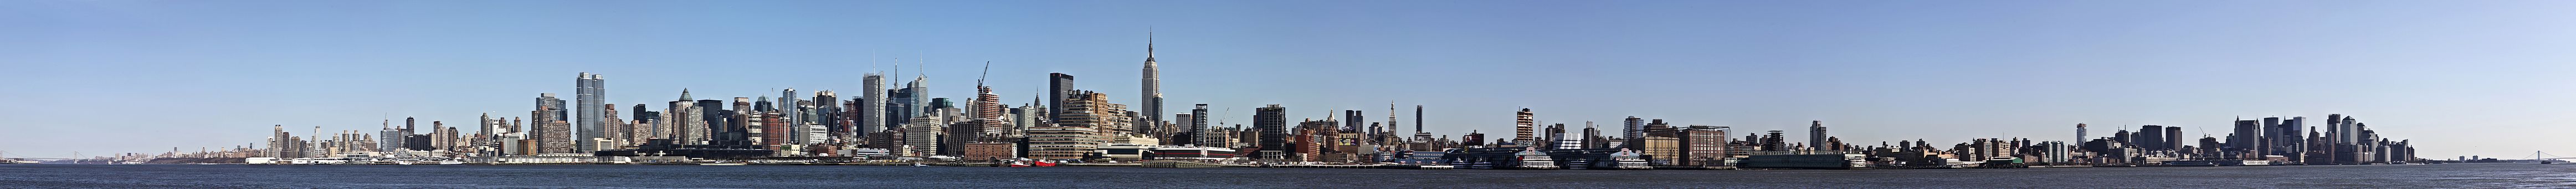 New York City skyline, by Jnn13